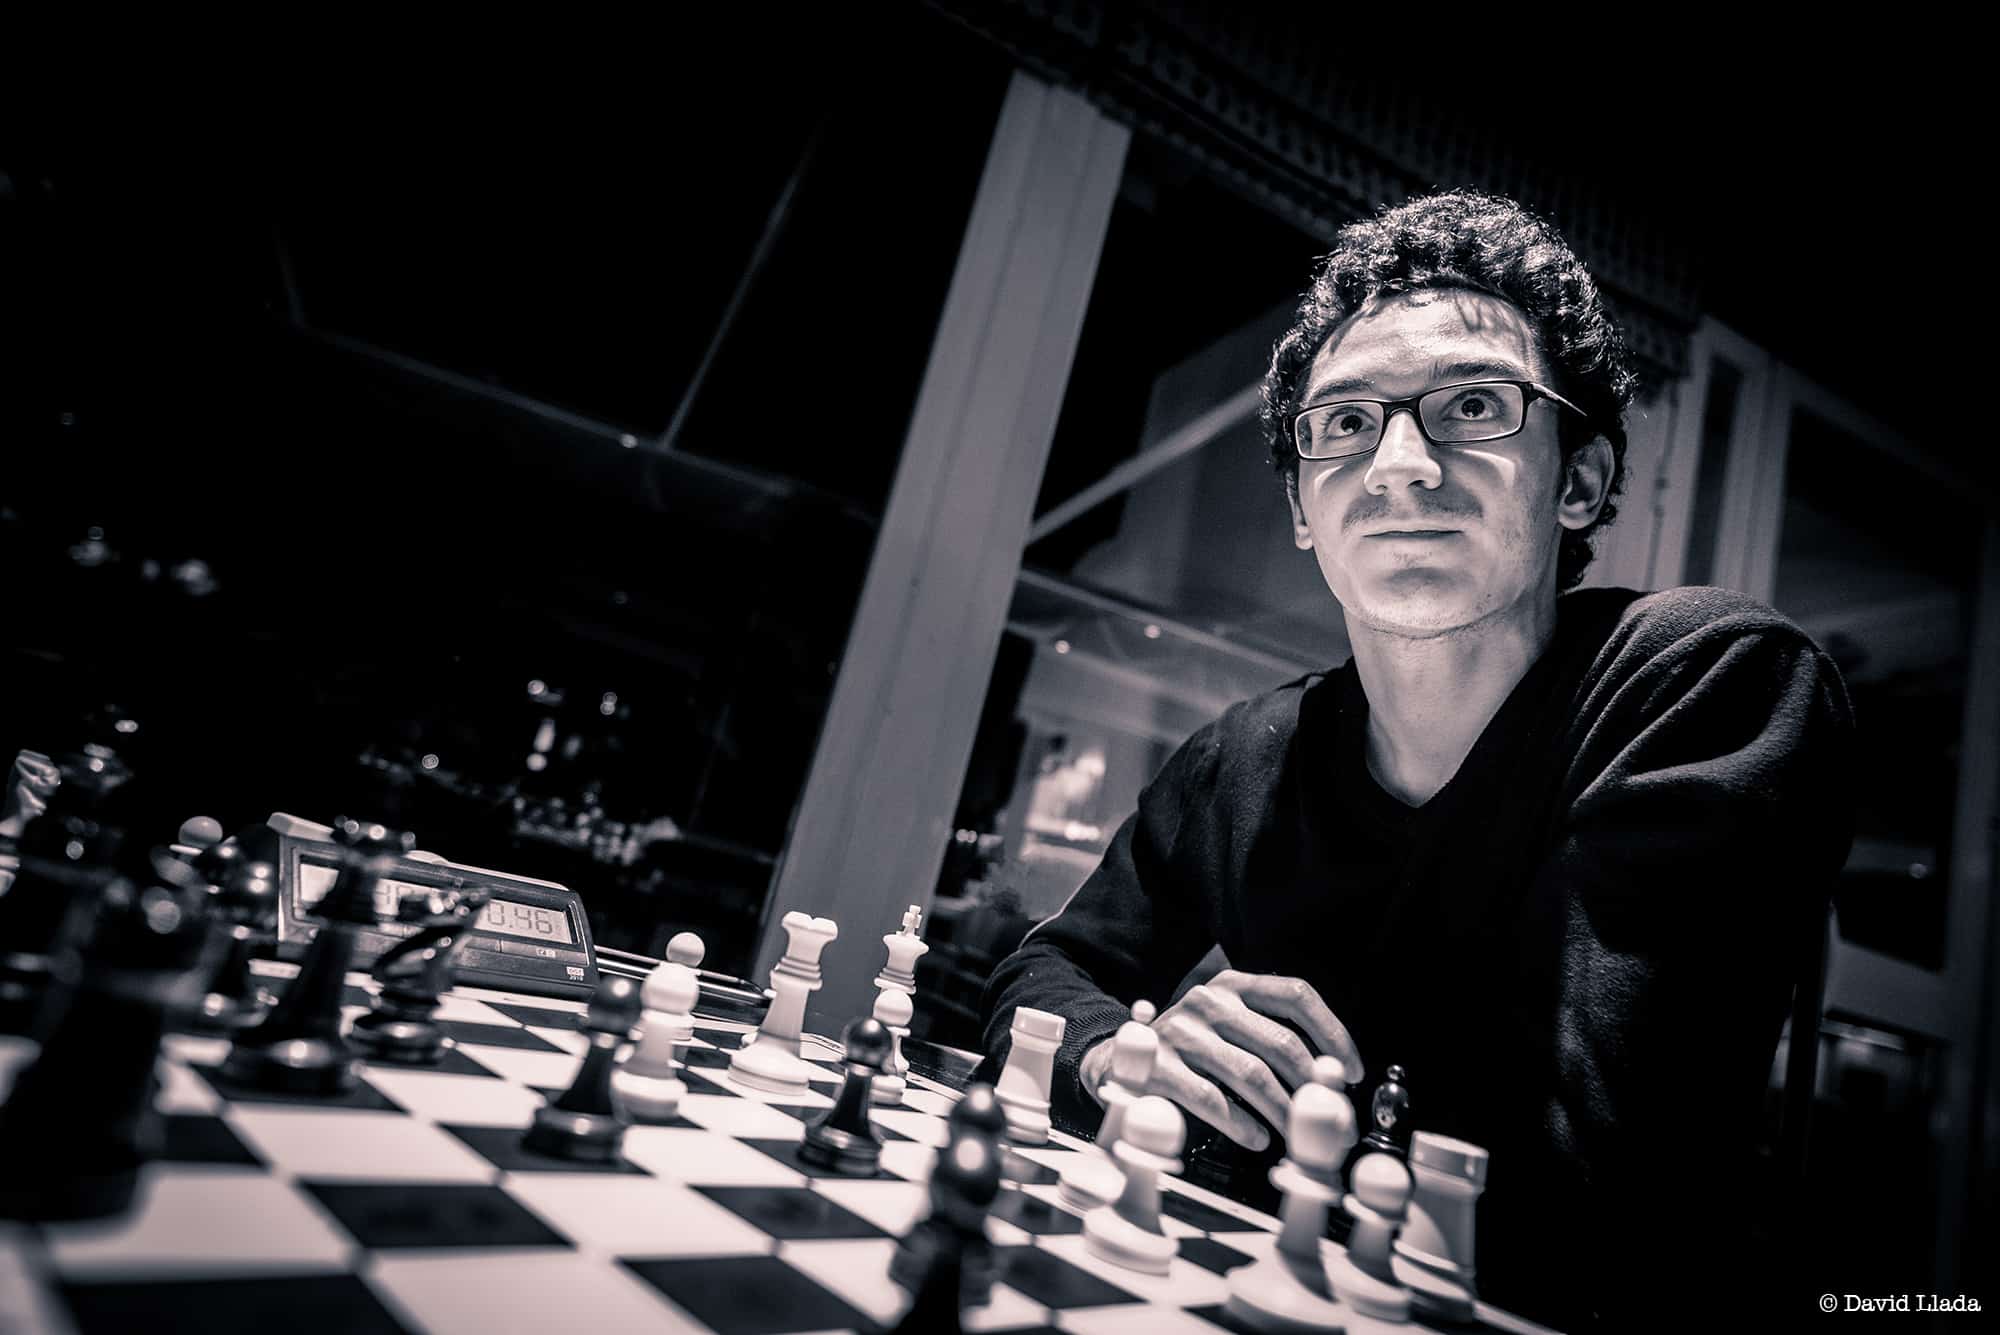 Fabiano Caruana is the challenger. Photo credit: DAVID LLADA